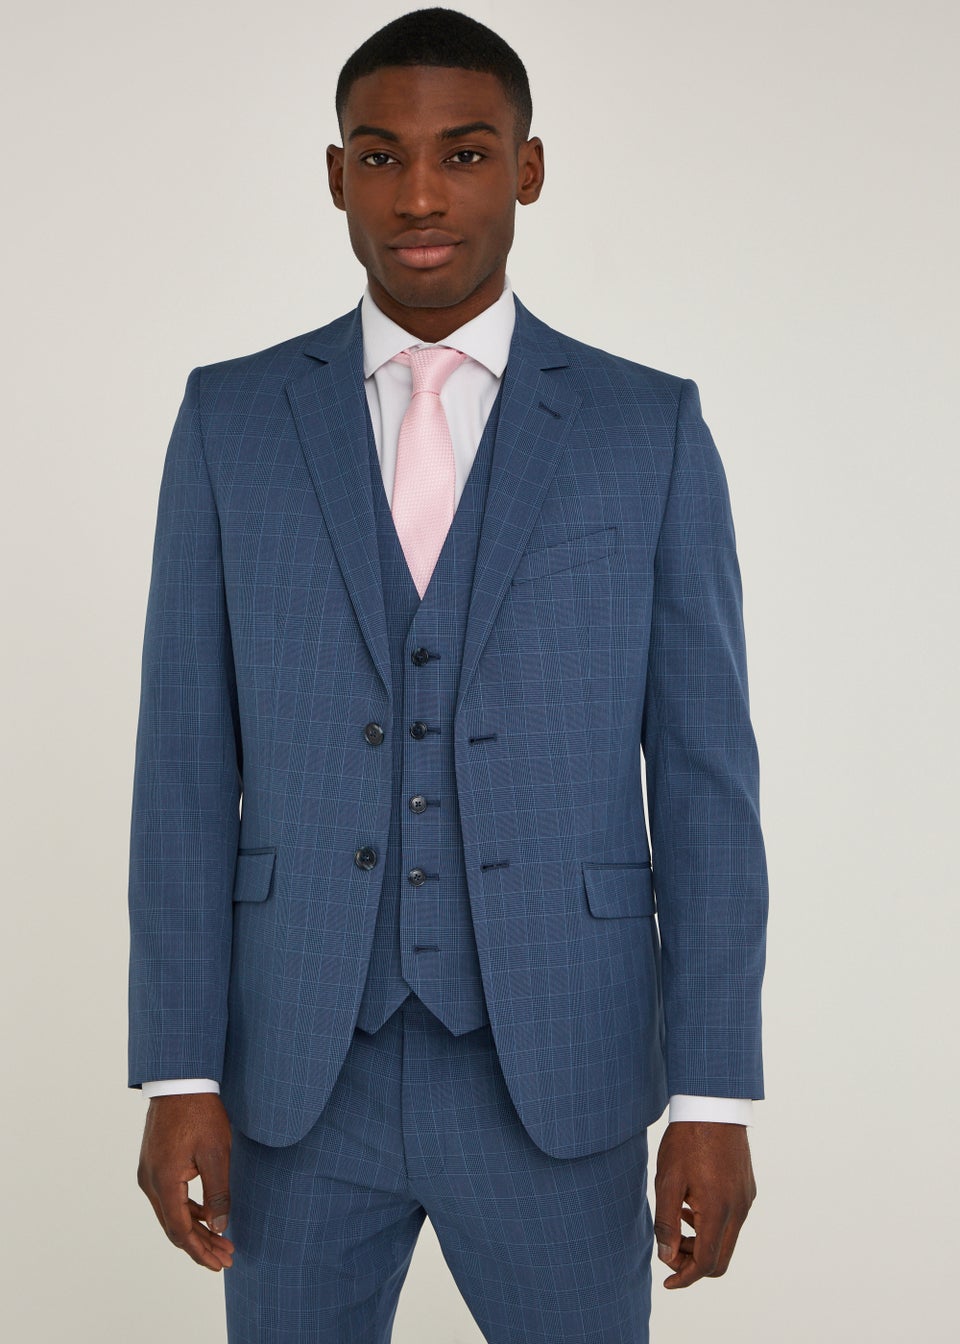 Taylor & Wright Hemsworth Blue Check Slim Fit Suit Jacket